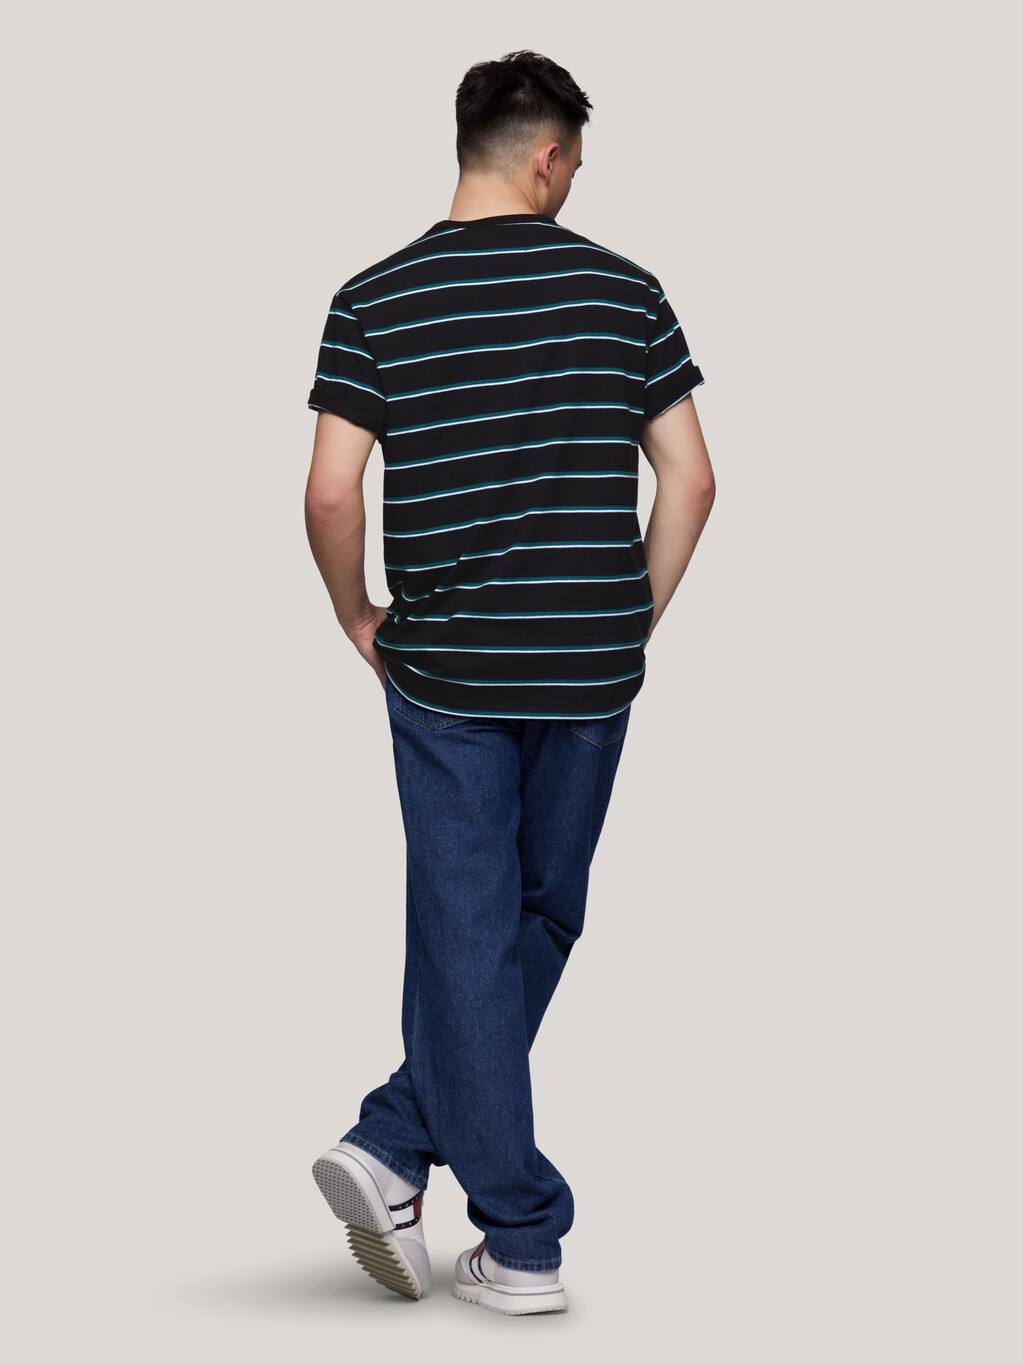 Stripe Transitional Cotton T-Shirt, Black, hi-res